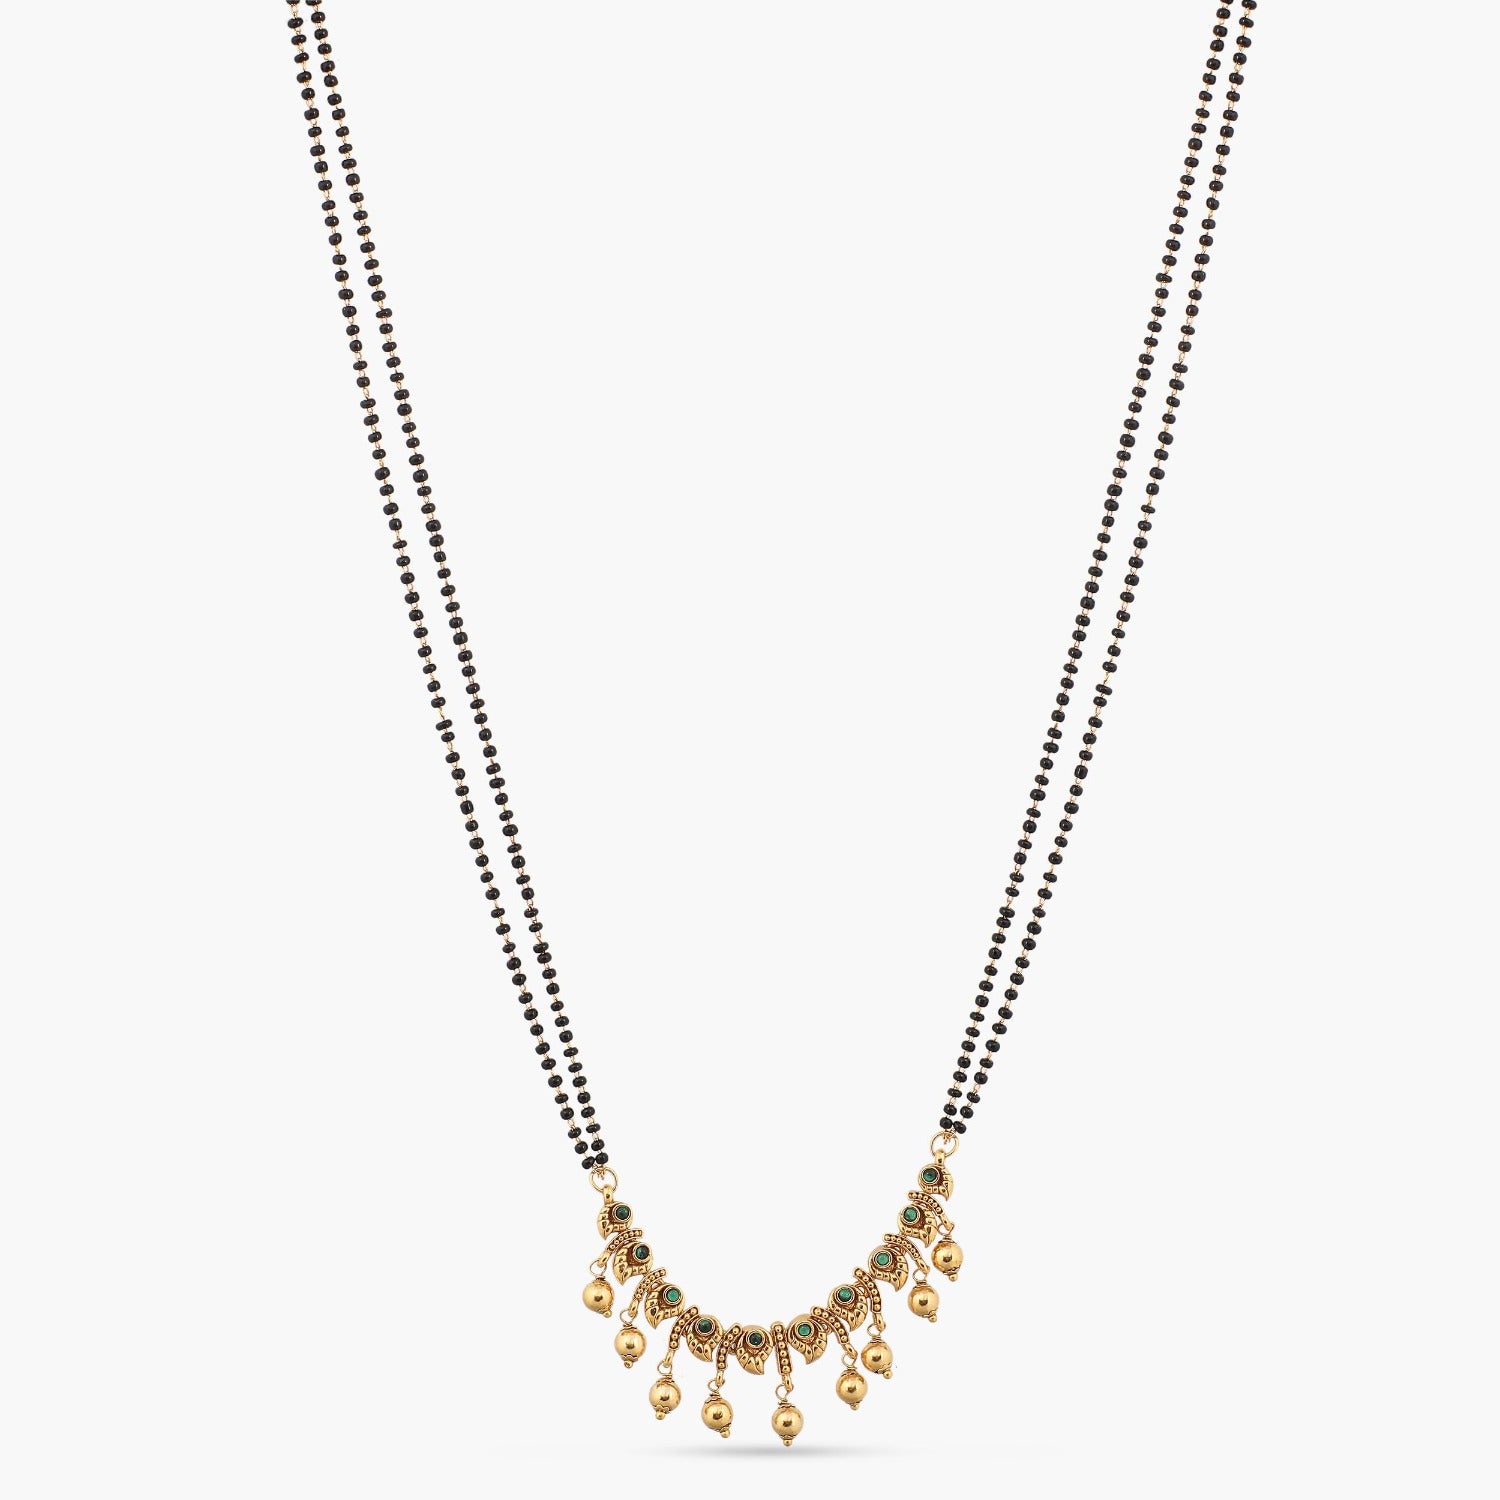 Buy the Mens Black Onyx Beaded Long Necklace | JaeBee Jewelry